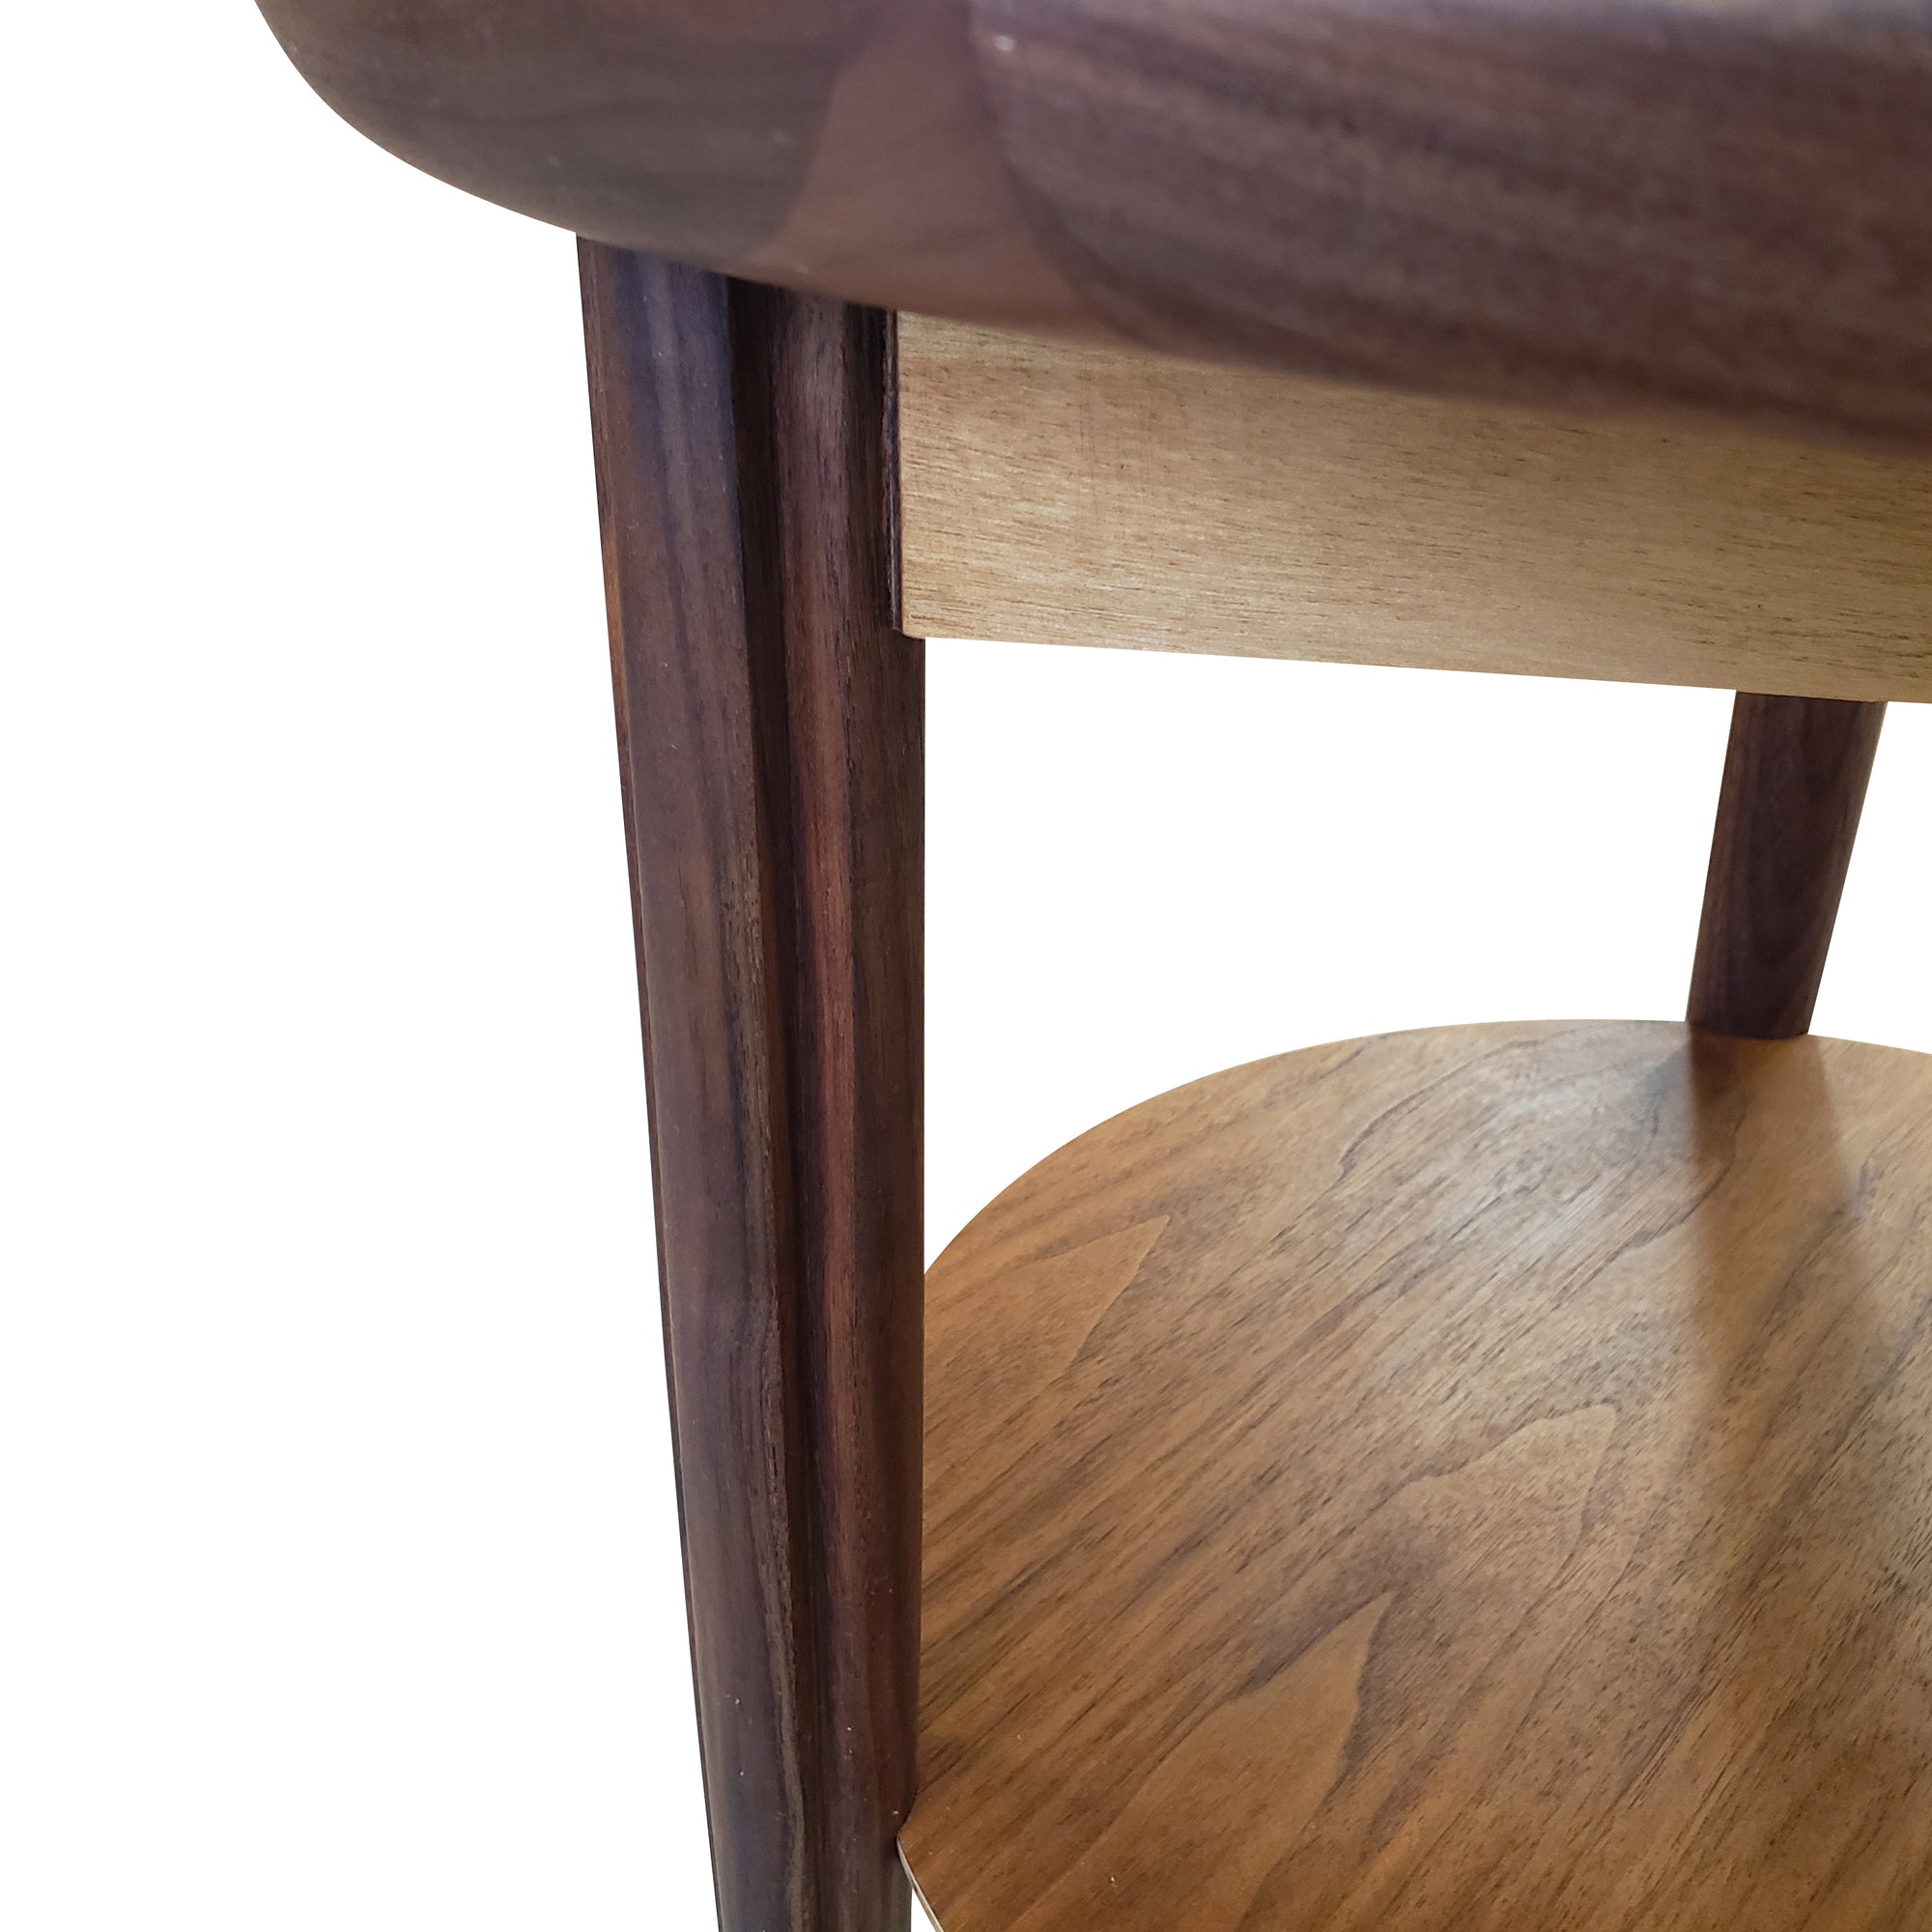 Deilcraft Coffee Table - Mid Century Modern Coffee Tables | Decade Five Furniture ... / 2 tiered, deilcraft walnut coffee table.